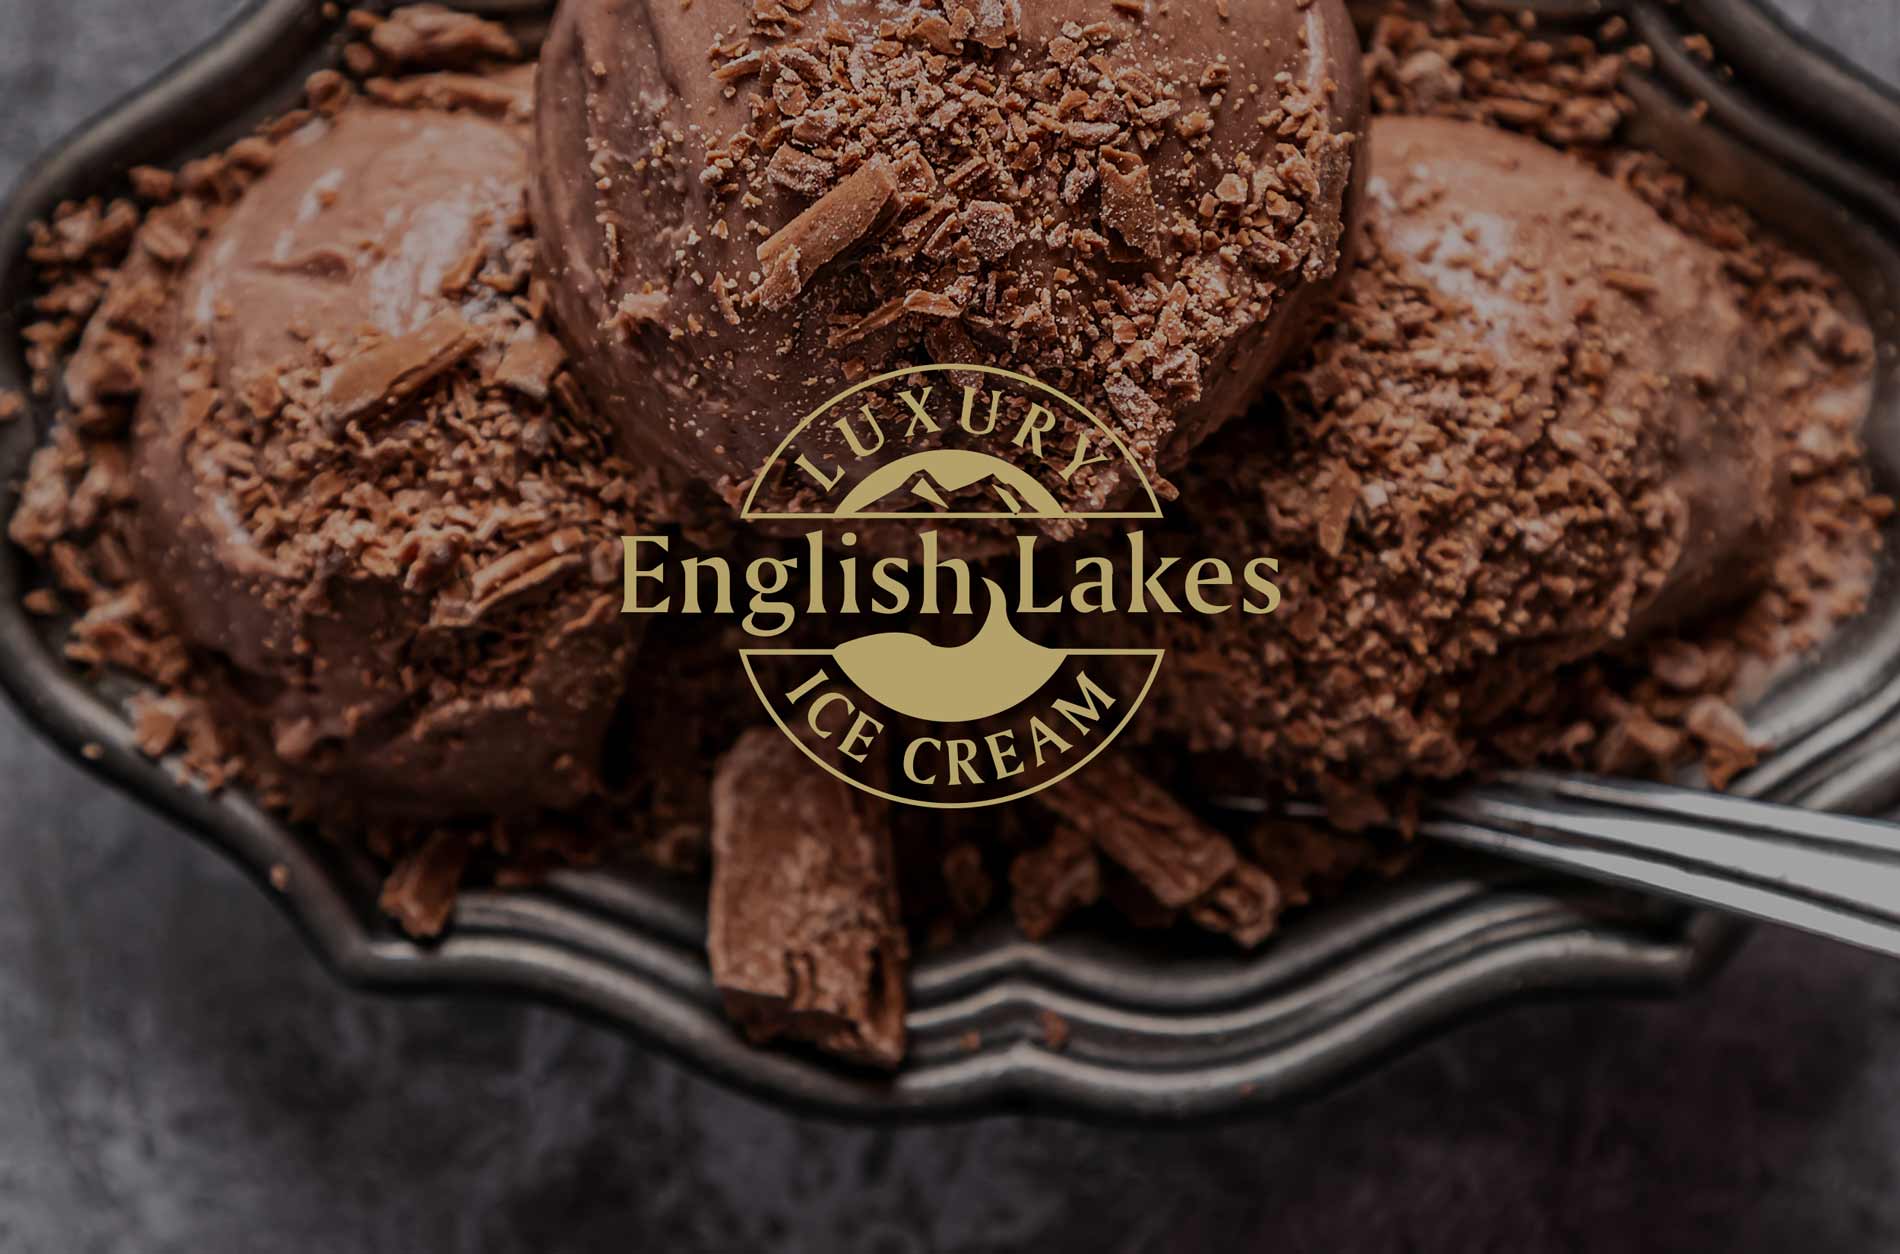 English Lakes Ice Cream Packaging Design